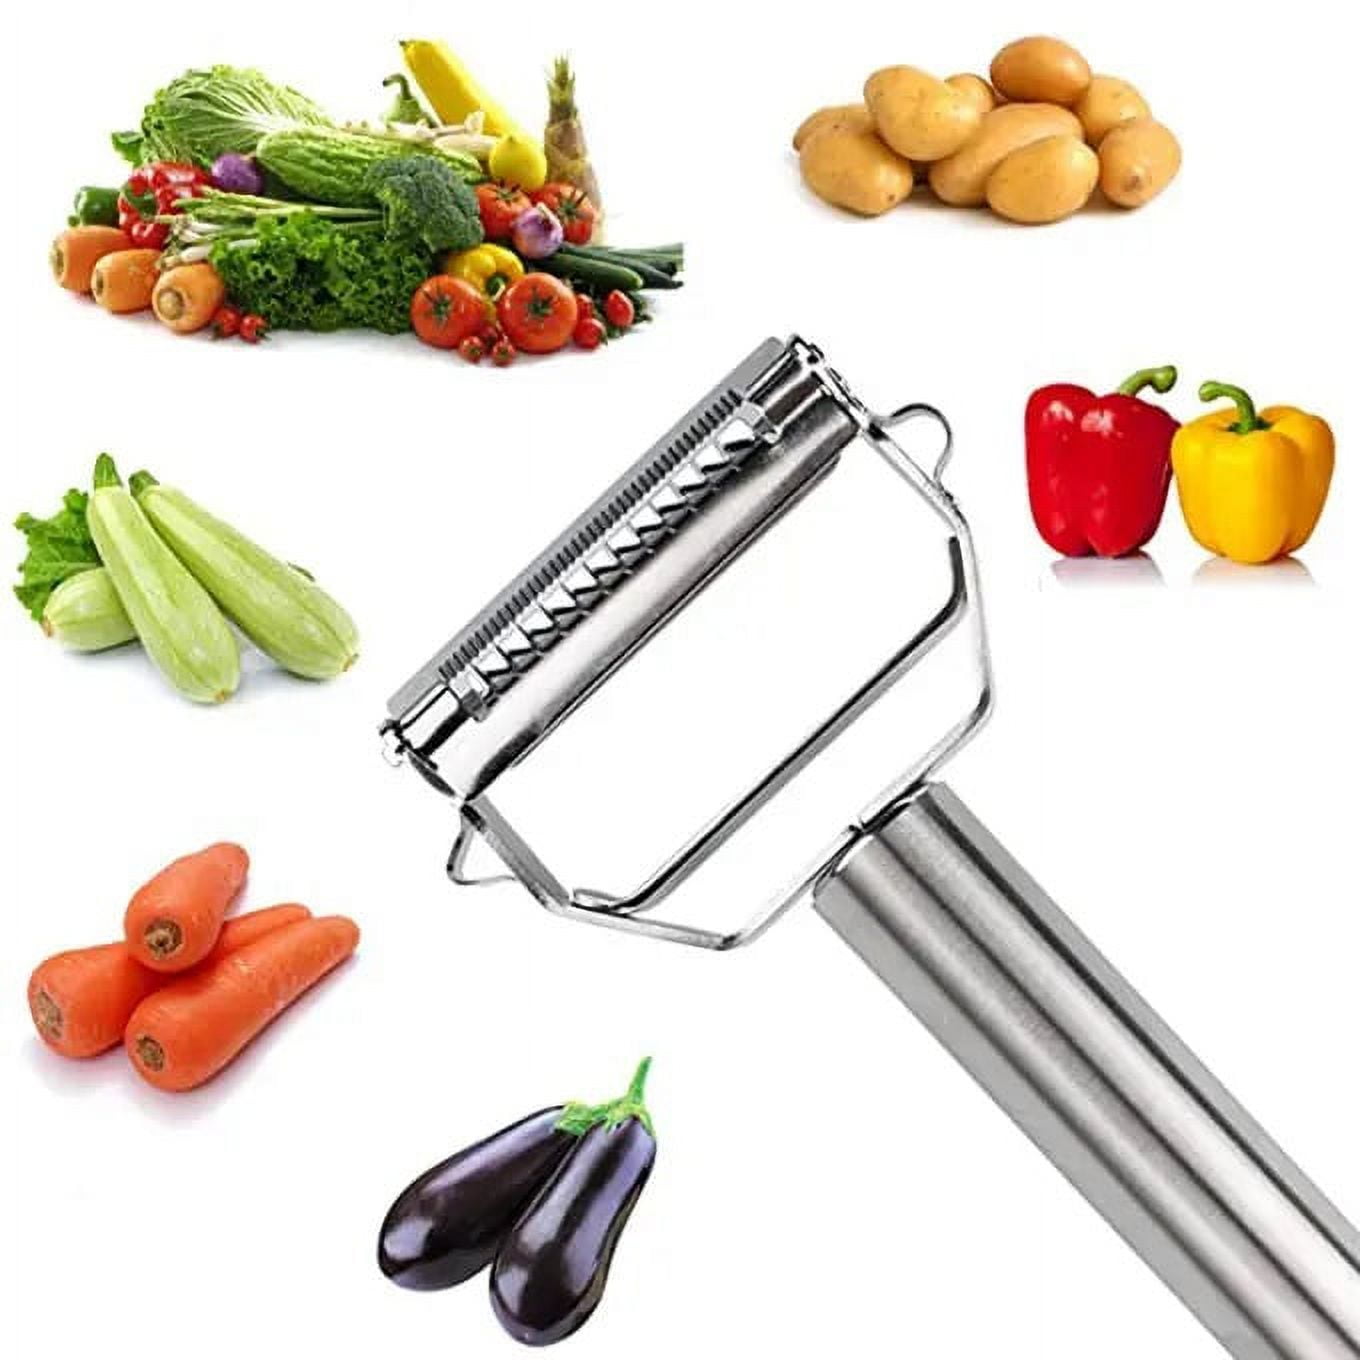 Zeno Stainless Steel Dual Blade Vegetable Peeler - Commercial Grade Julienne Cutter - Fruit, Potatoes, Carrot, Cucumber, Dishwasher Safe, Size: 7